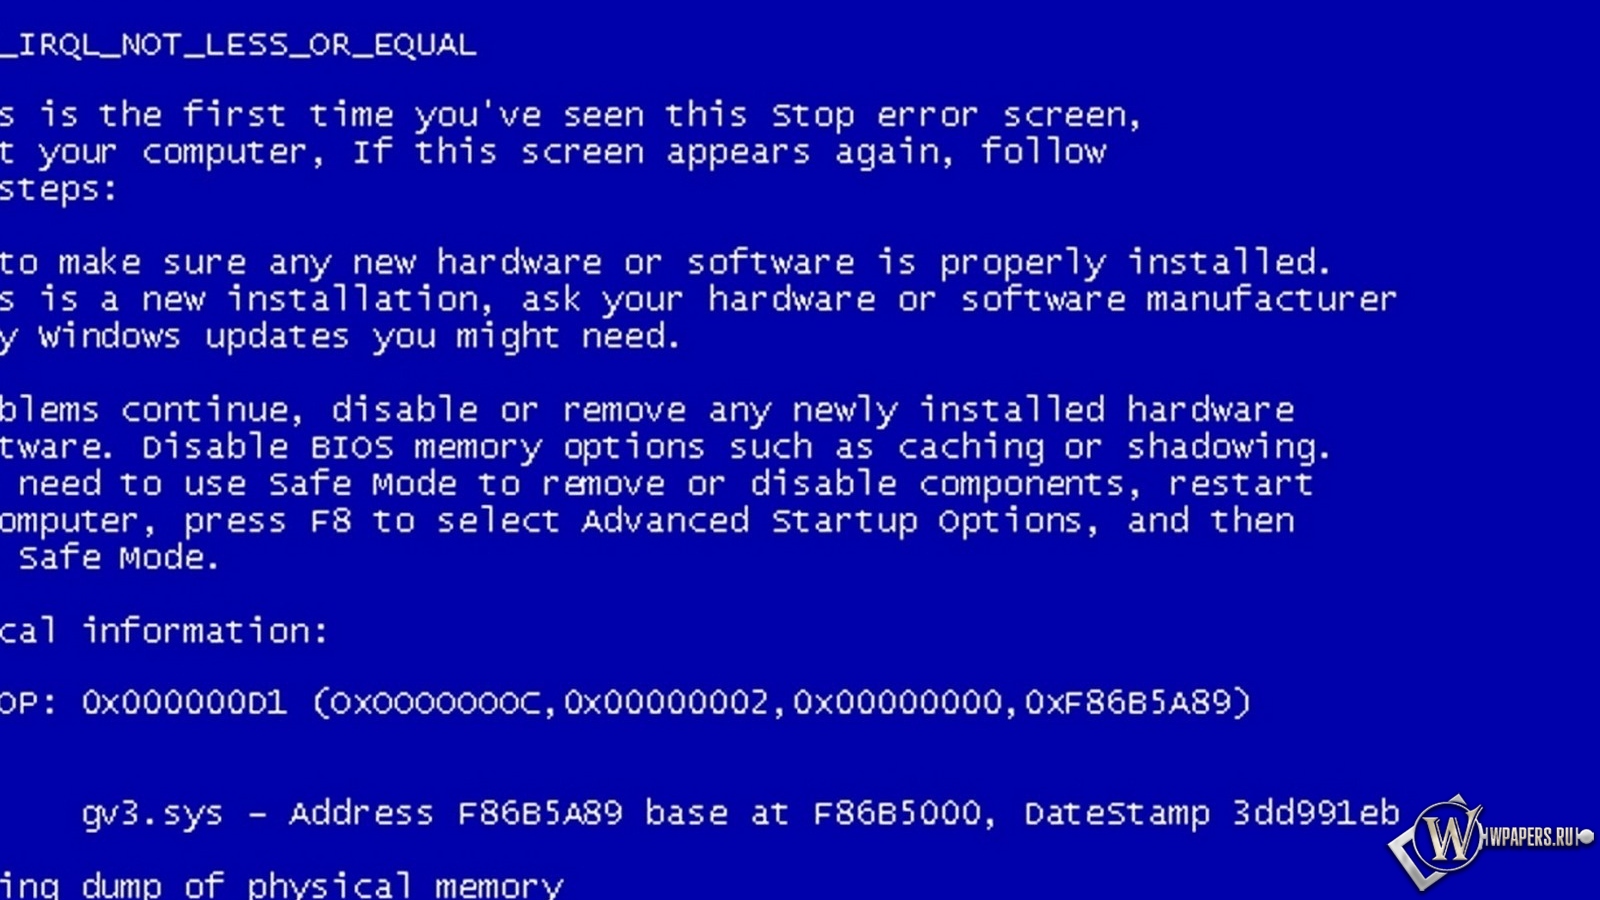 Error code 0x8000ffff code deep ocean. Синий экран смерти. Синий экран смерти Windows. CBTBQ 'RHF cvthnb. Ошибка синий экран.